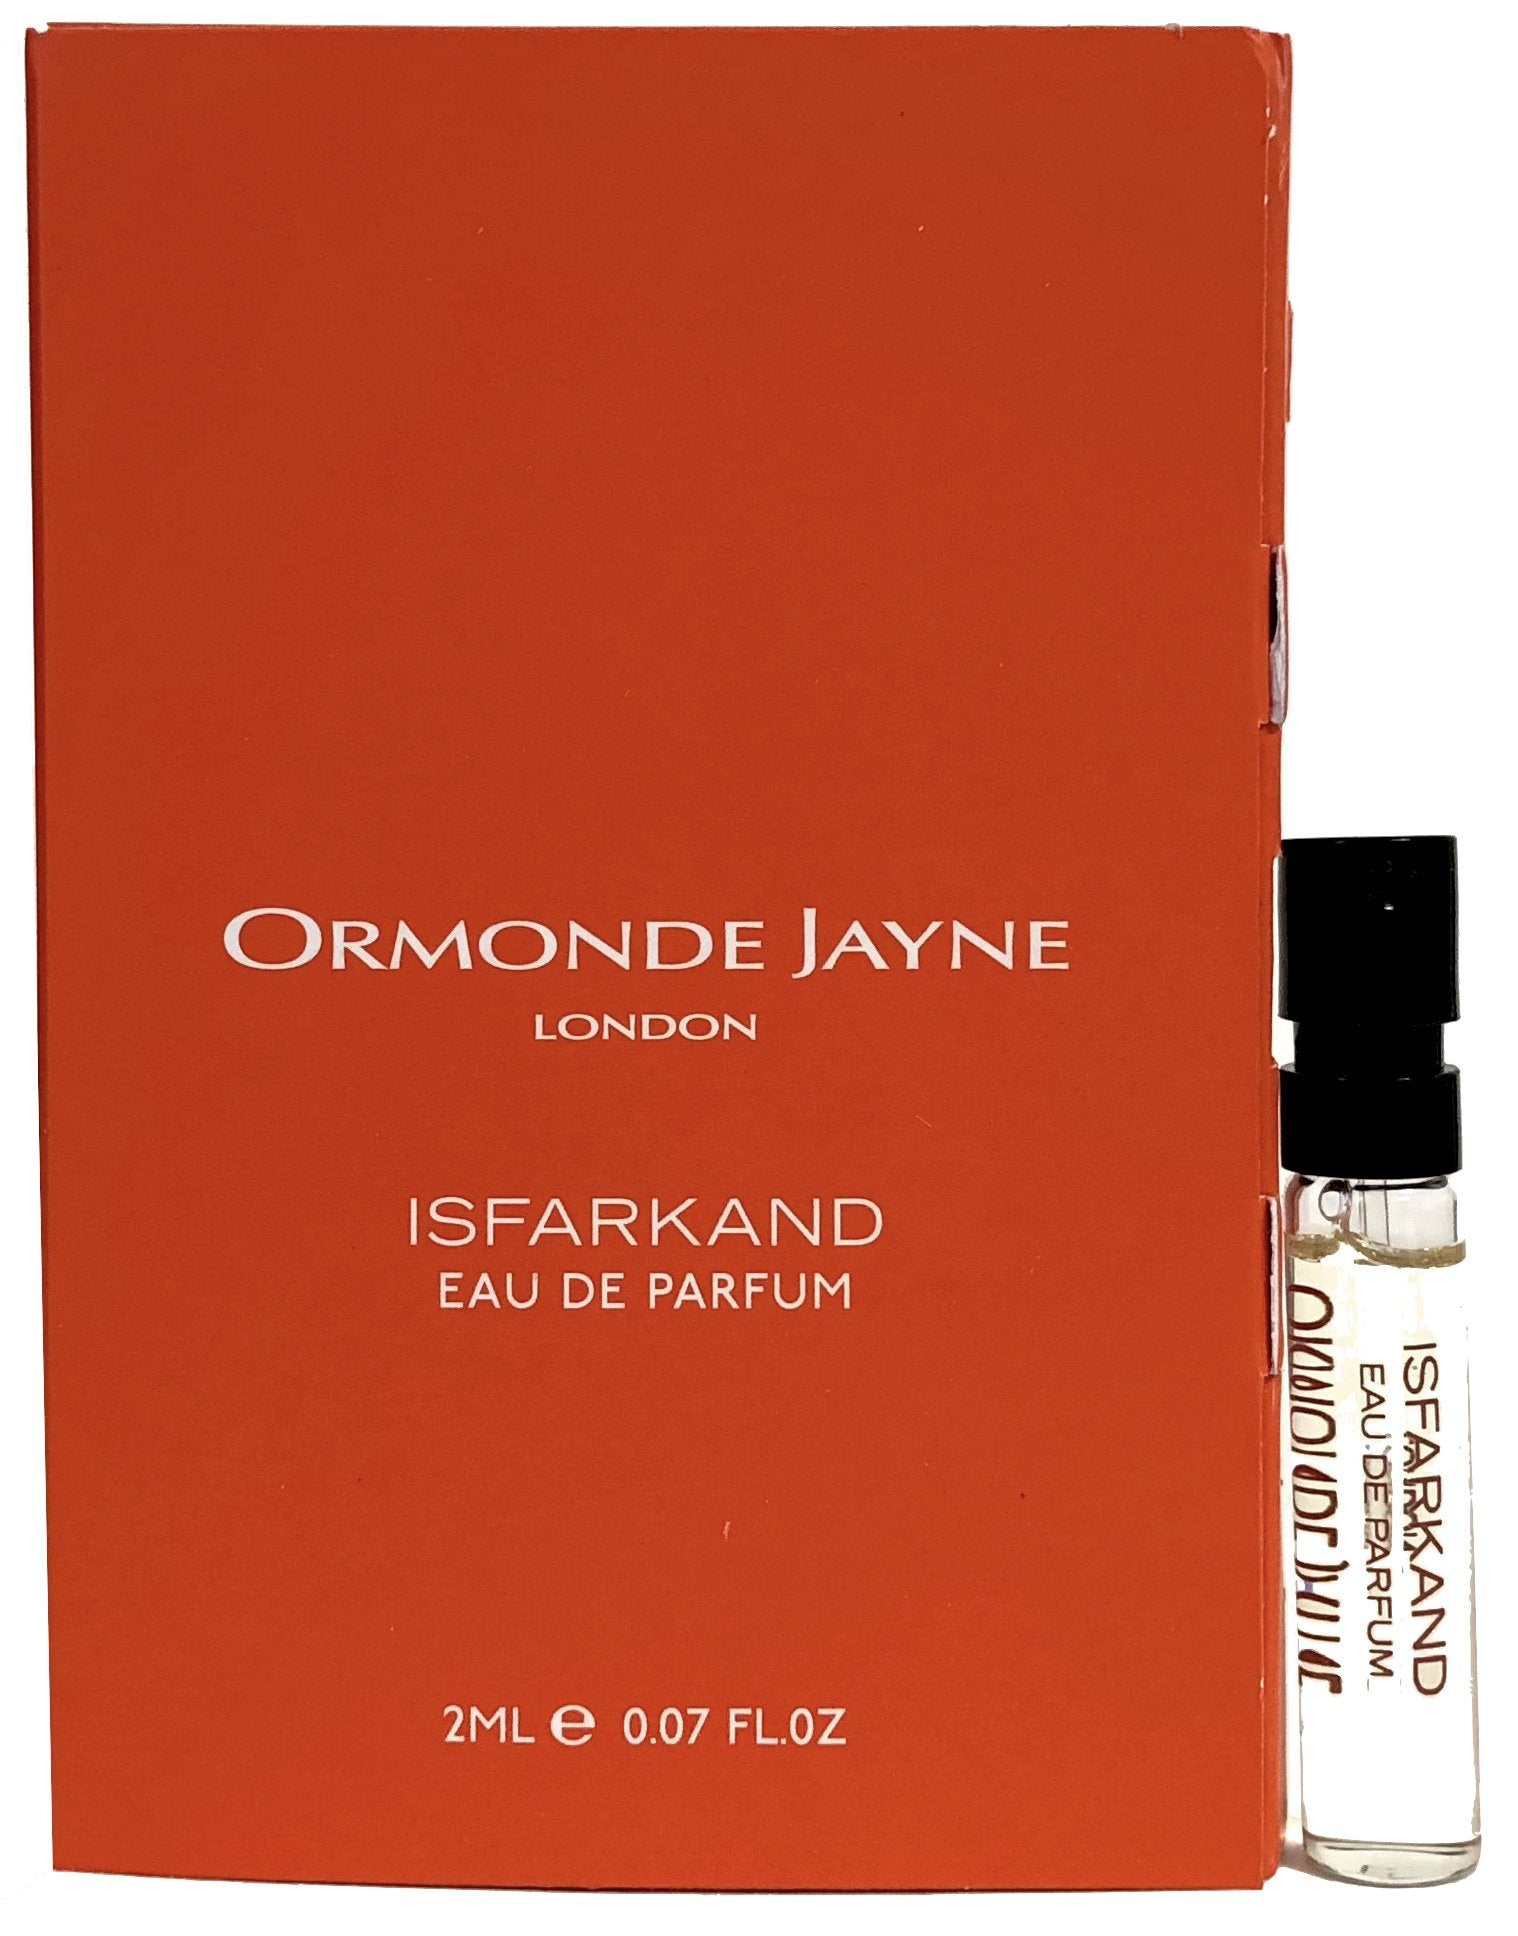 Ormonde Jayne Isfarkand 2ml mostre oficiale de parfum